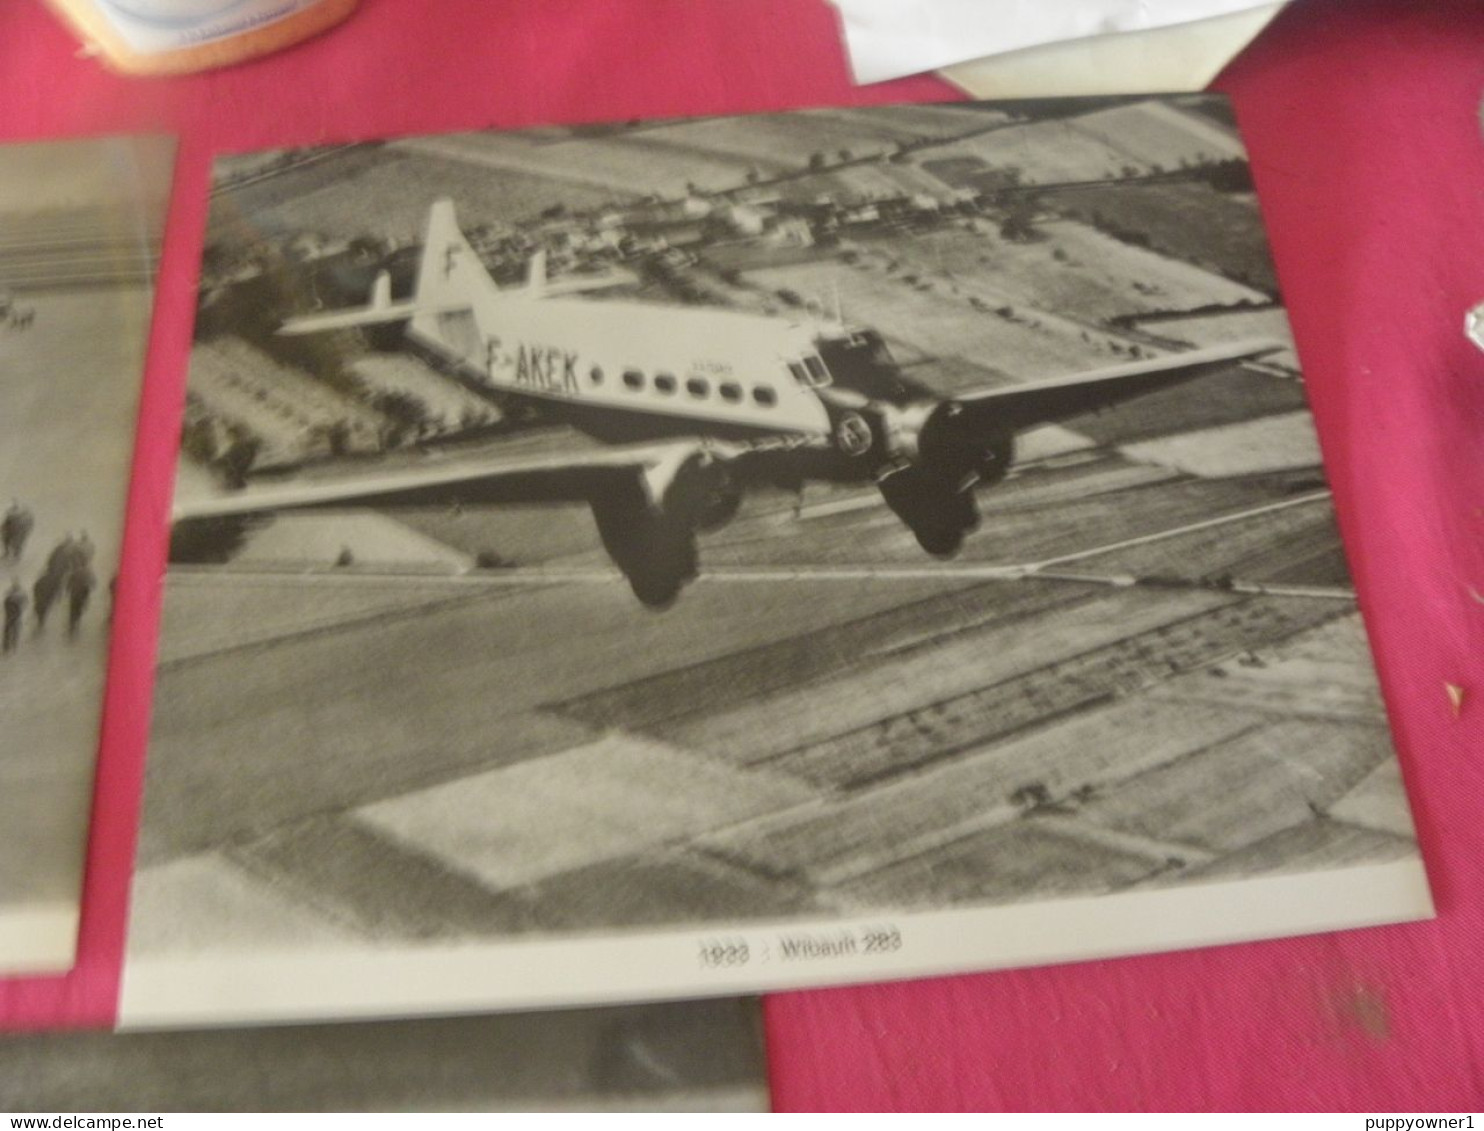 3 Vintage Photo Avion - Poster